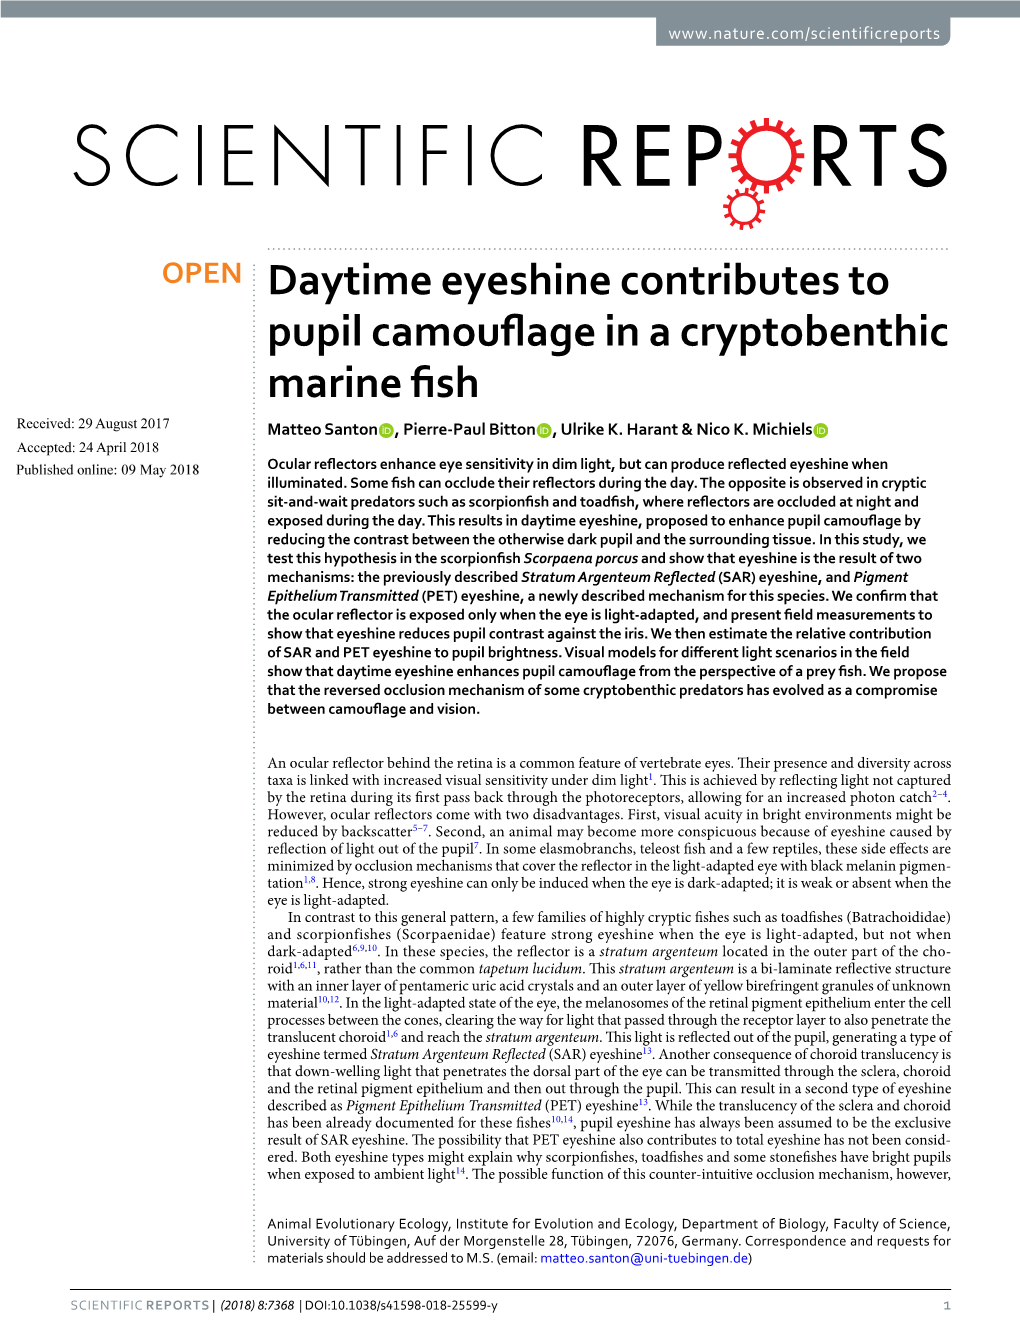 Daytime Eyeshine Contributes to Pupil Camoufage in a Cryptobenthic Marine Fsh Received: 29 August 2017 Matteo Santon , Pierre-Paul Bitton , Ulrike K